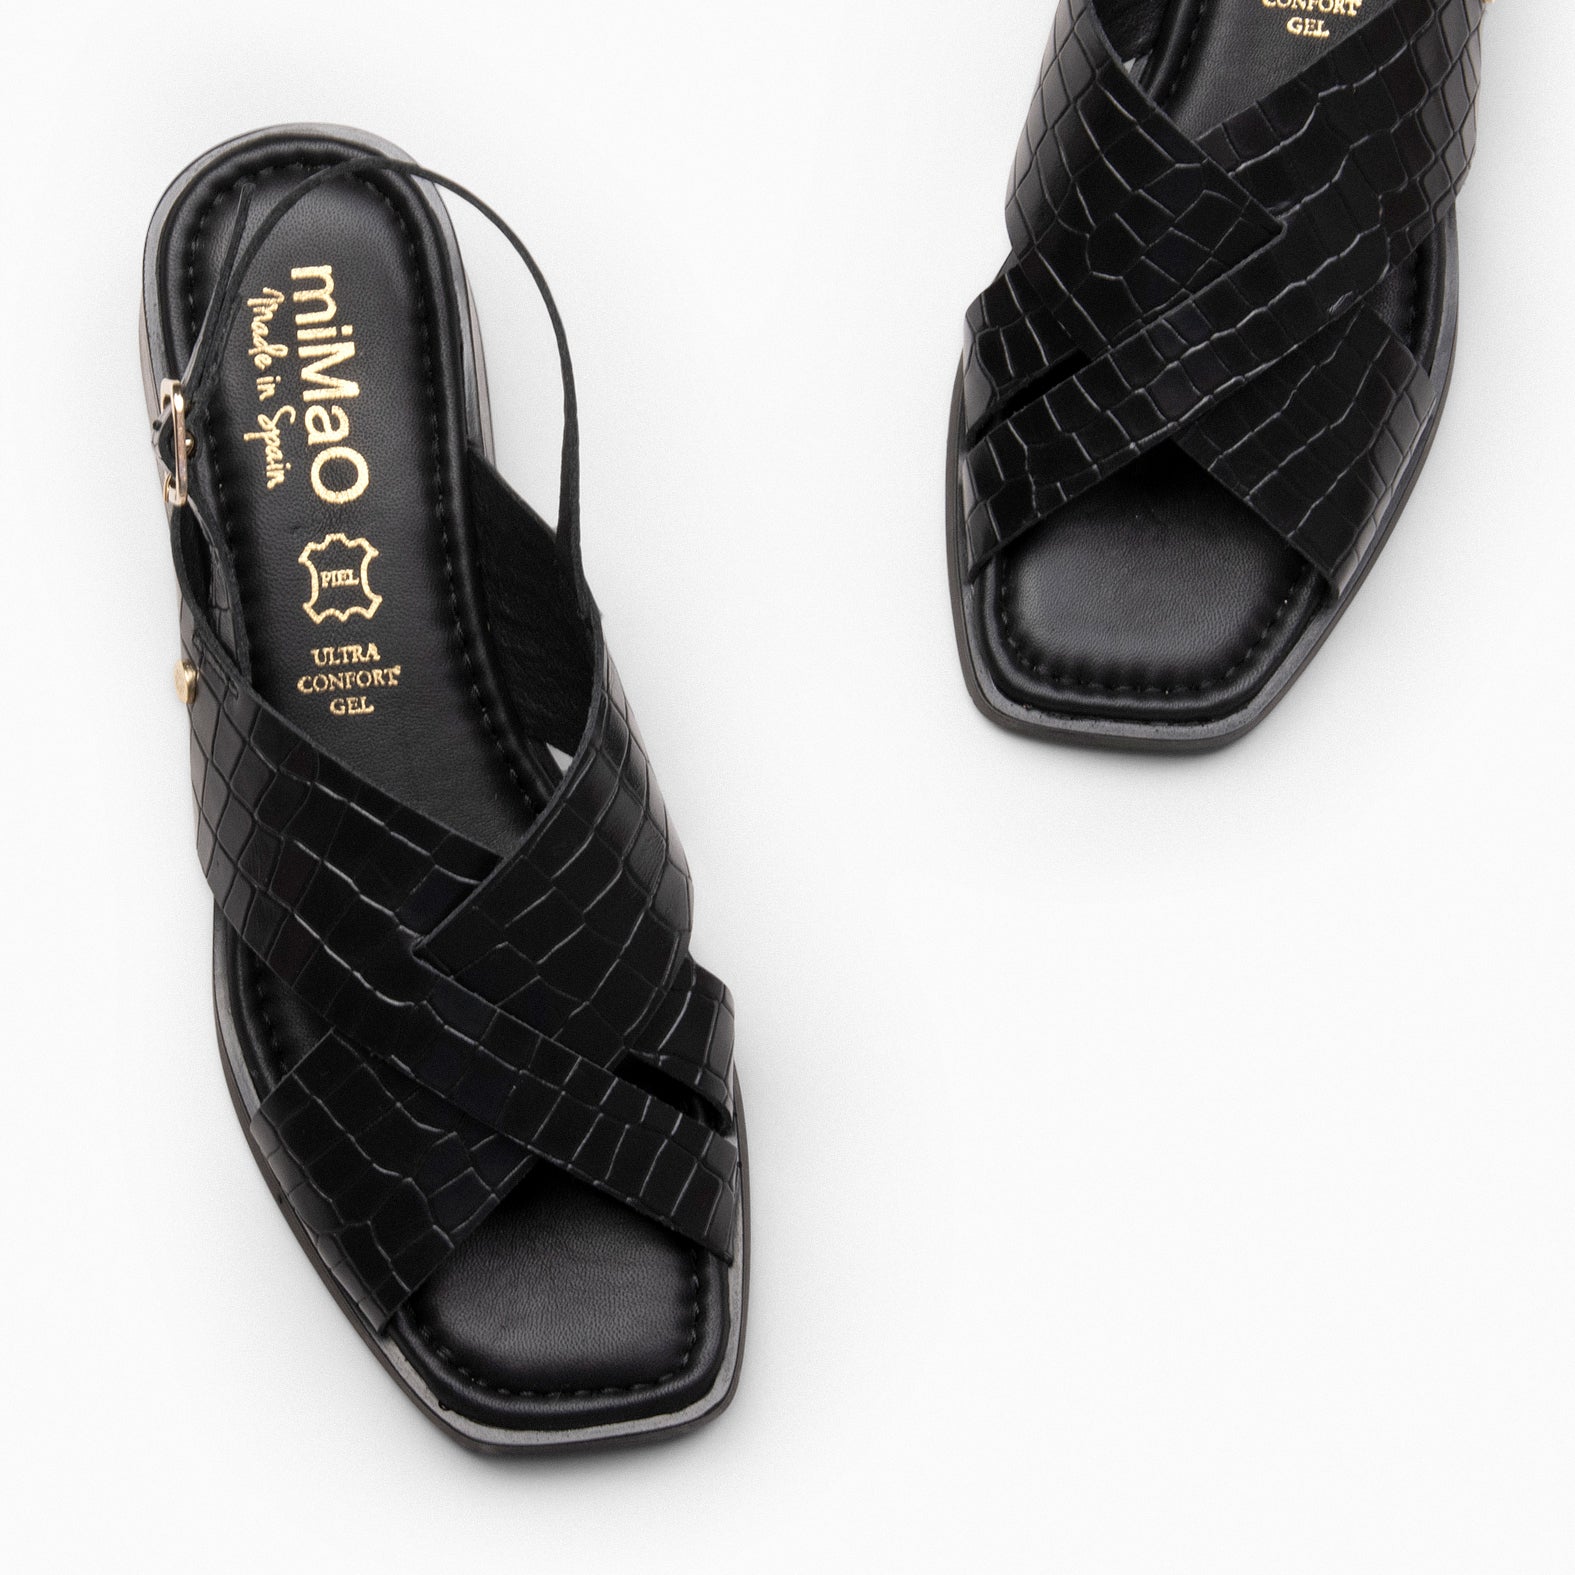 BETANIA - BLACK Flat Sandals